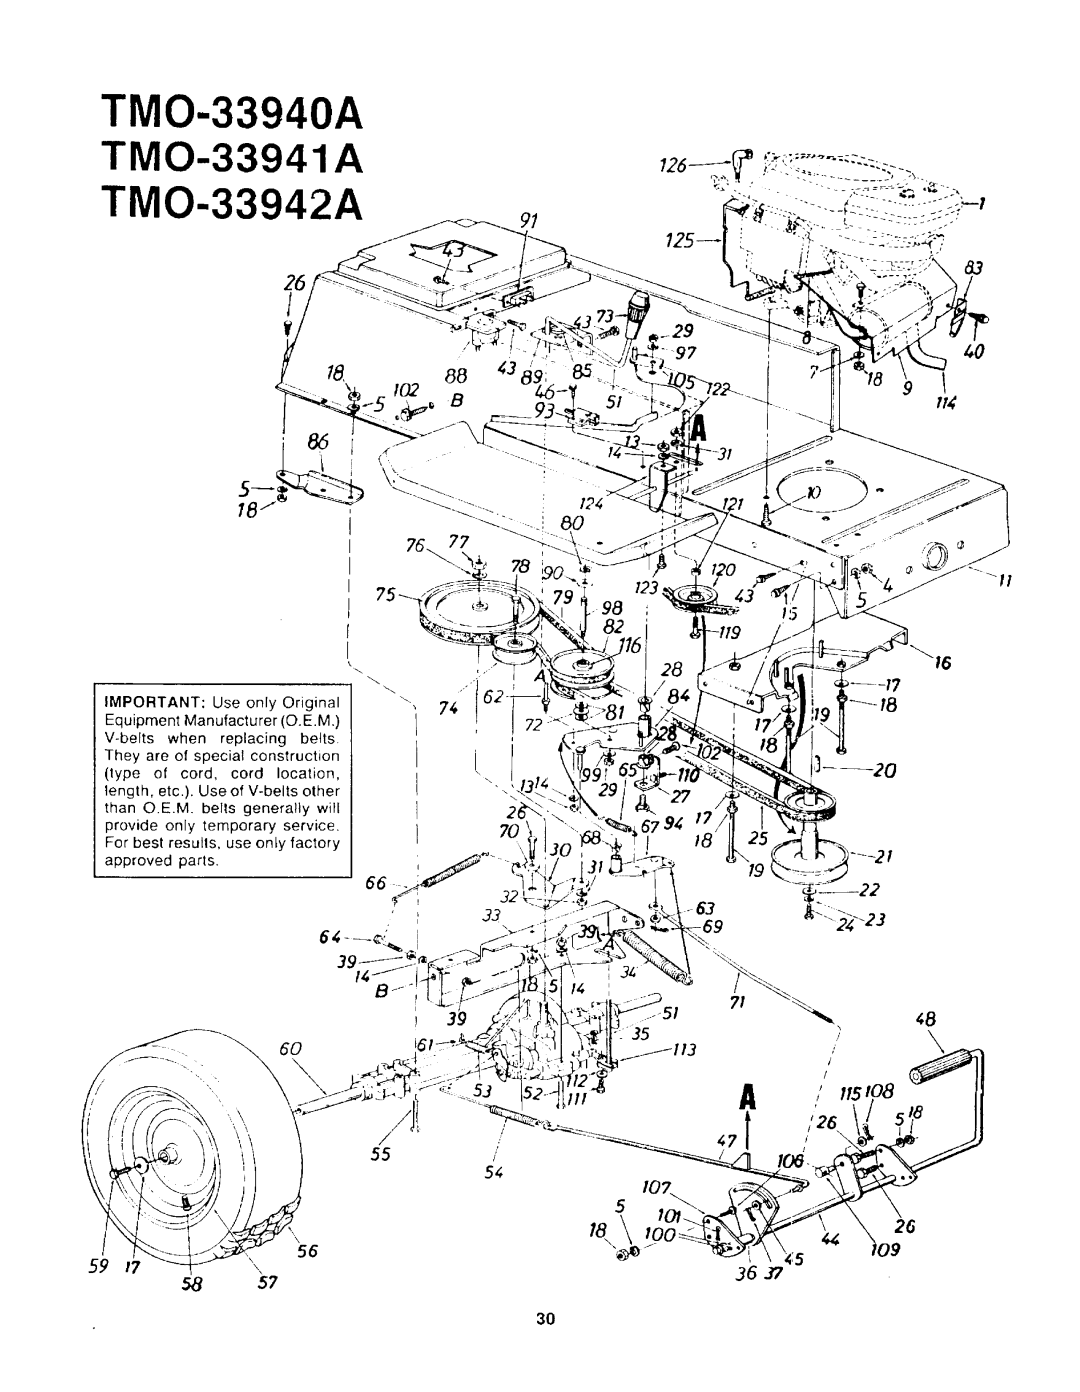 Montgomery Ward TMO-33941A, TMO-33940A, TMO-33942A manual 